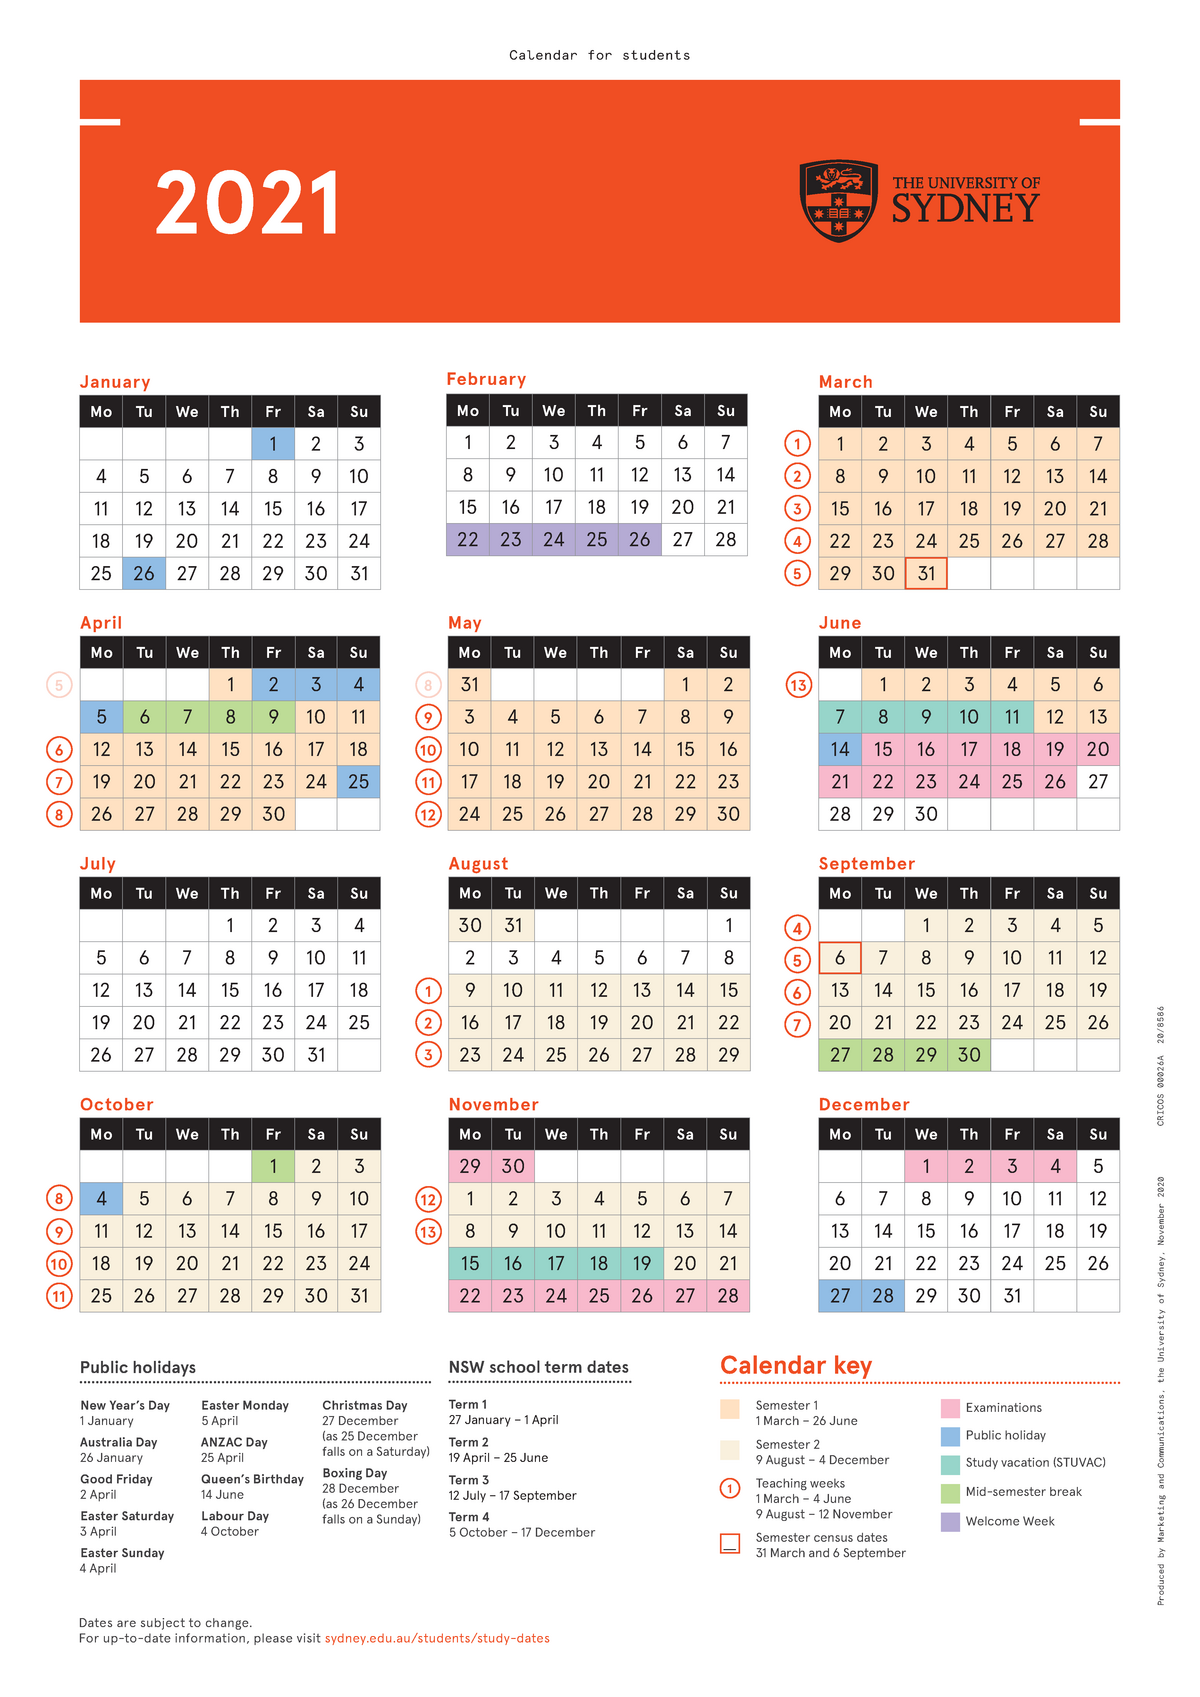 2021 University of Sydney Calendar - Key Dates - AWSS2015 - USyd - StuDocu